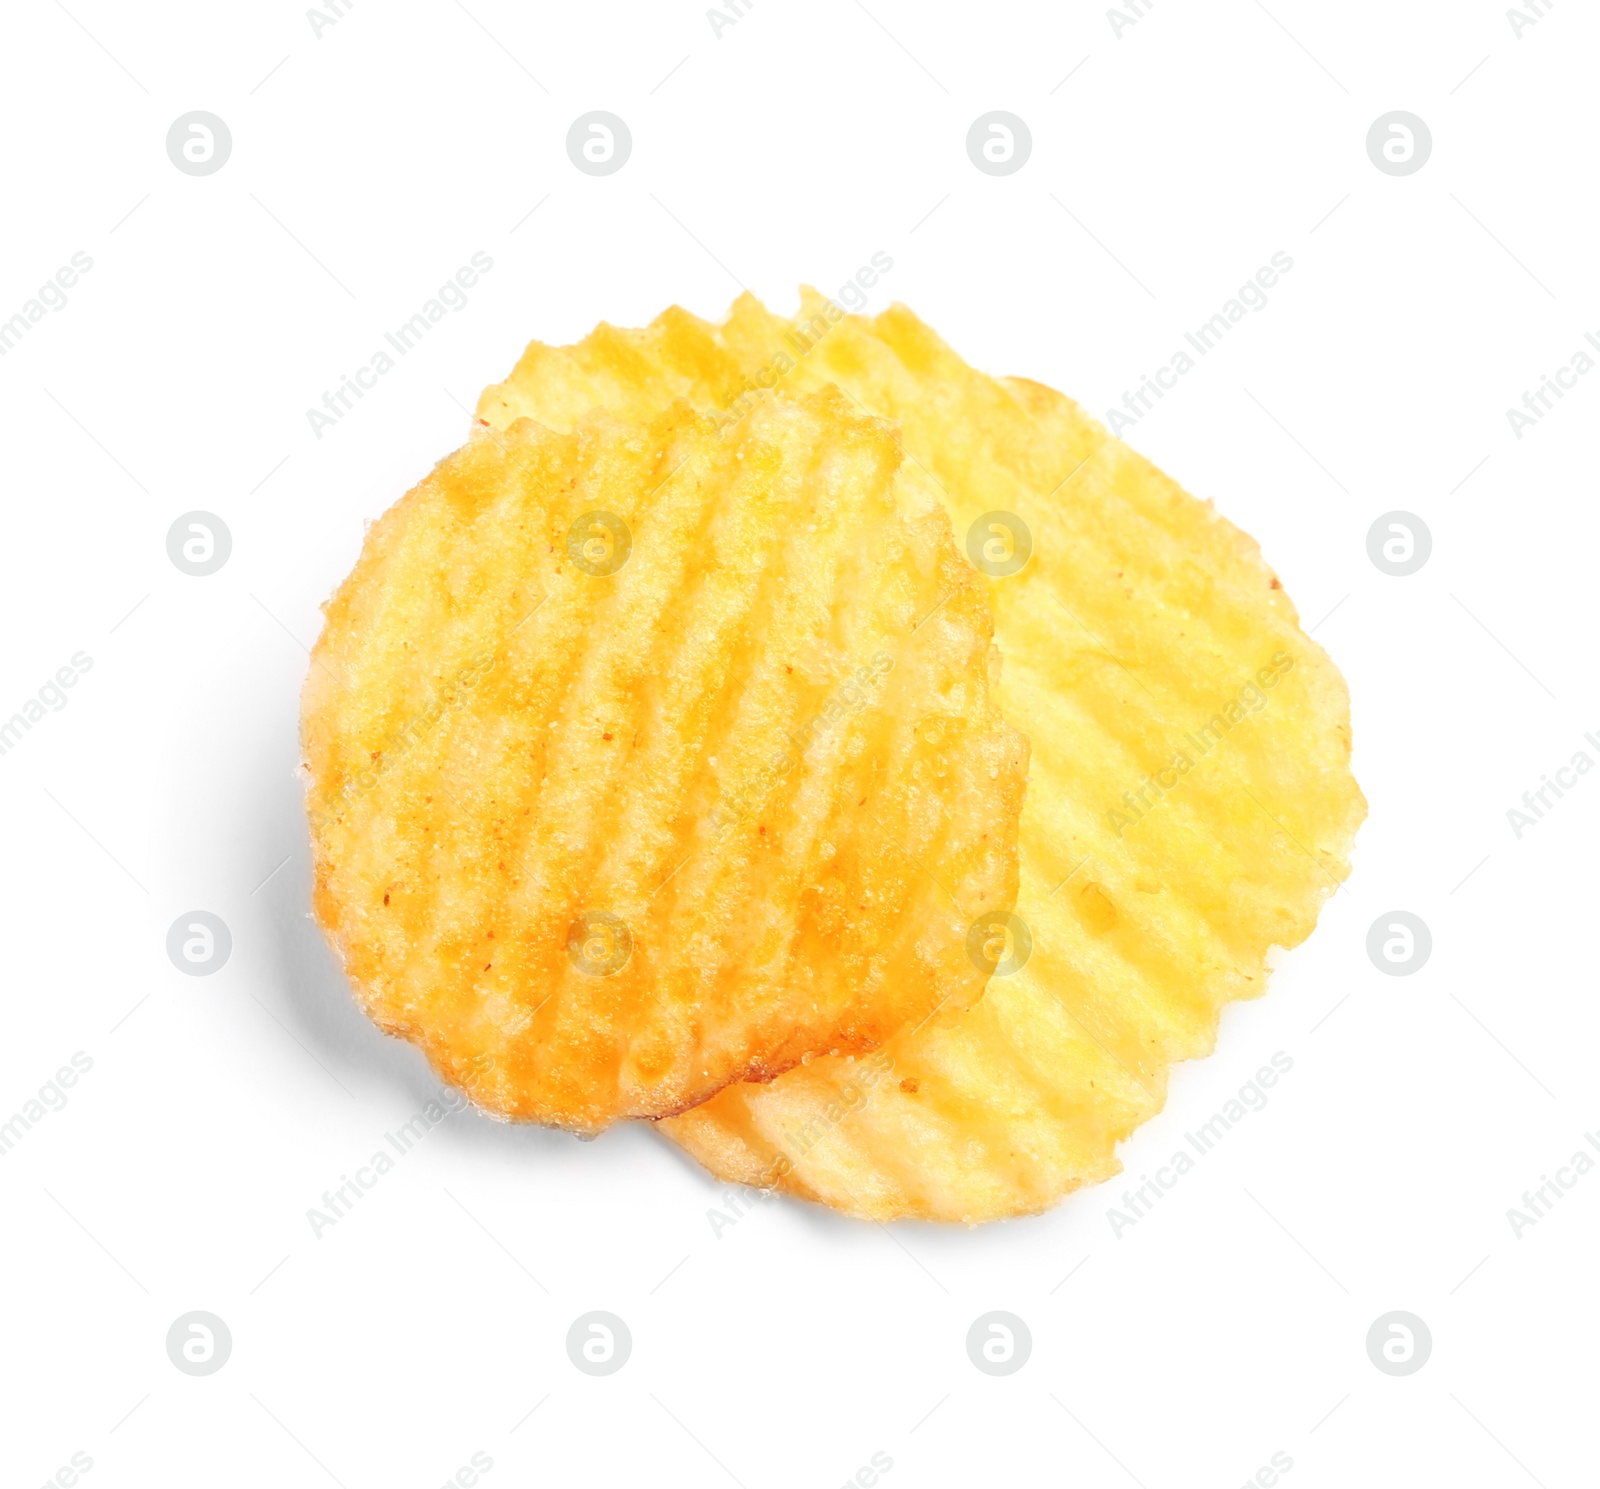 Photo of Tasty ridged potato chips on white background